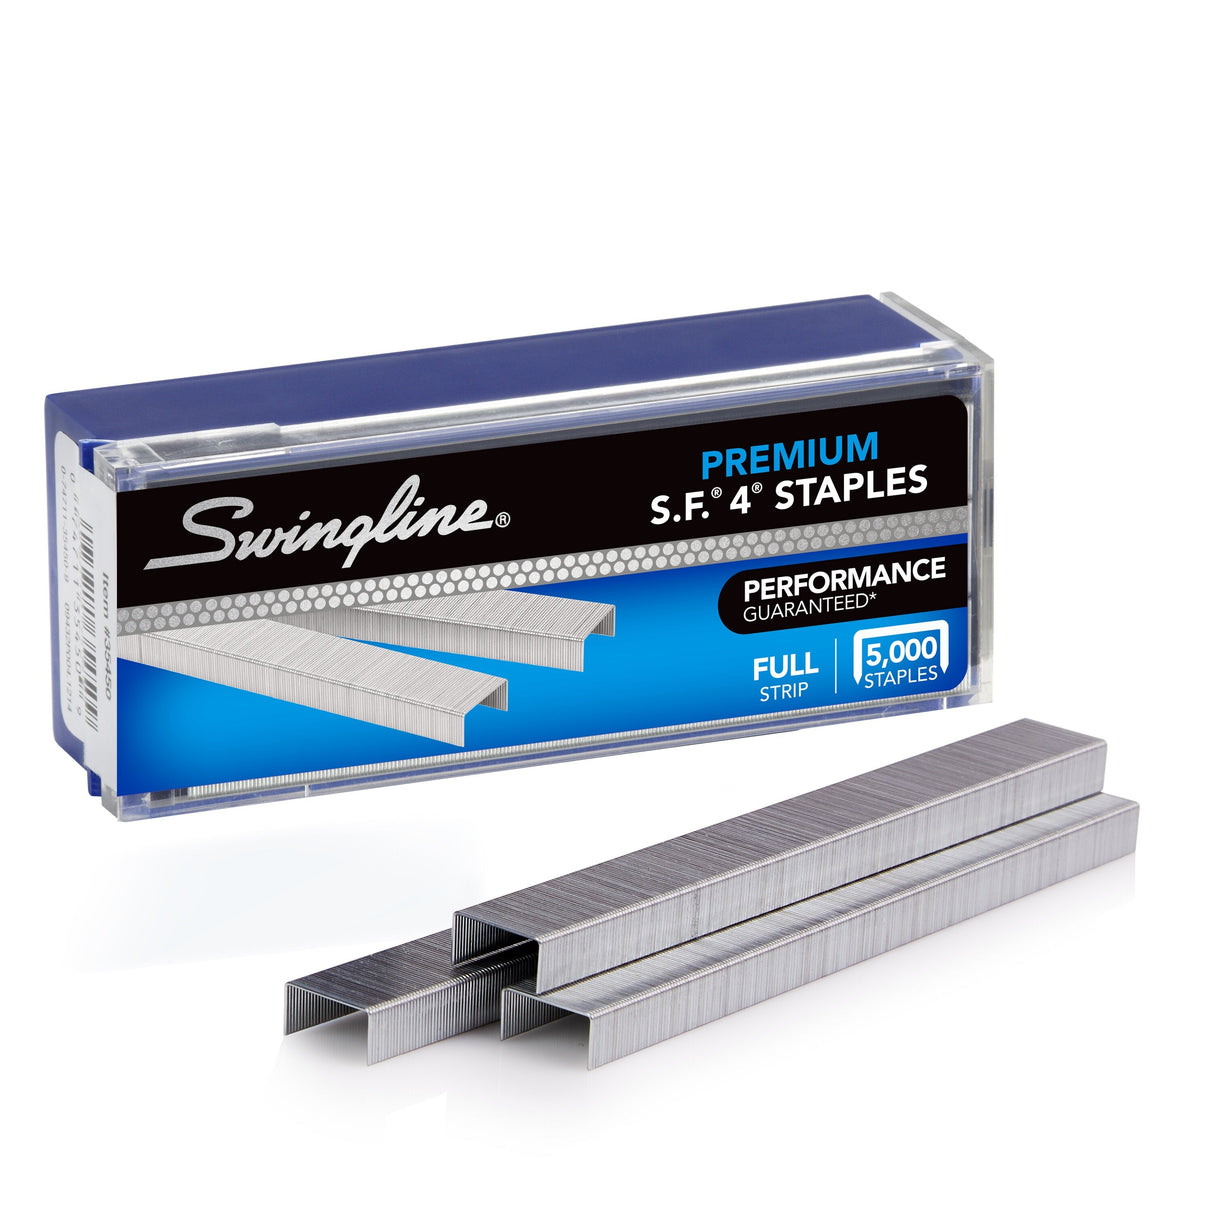 Swingline S.F. 4 Premium Staples, 1/4" Length, 210 Per Strip, 5,000/Box, 20 Pack - Office Stapling Essential